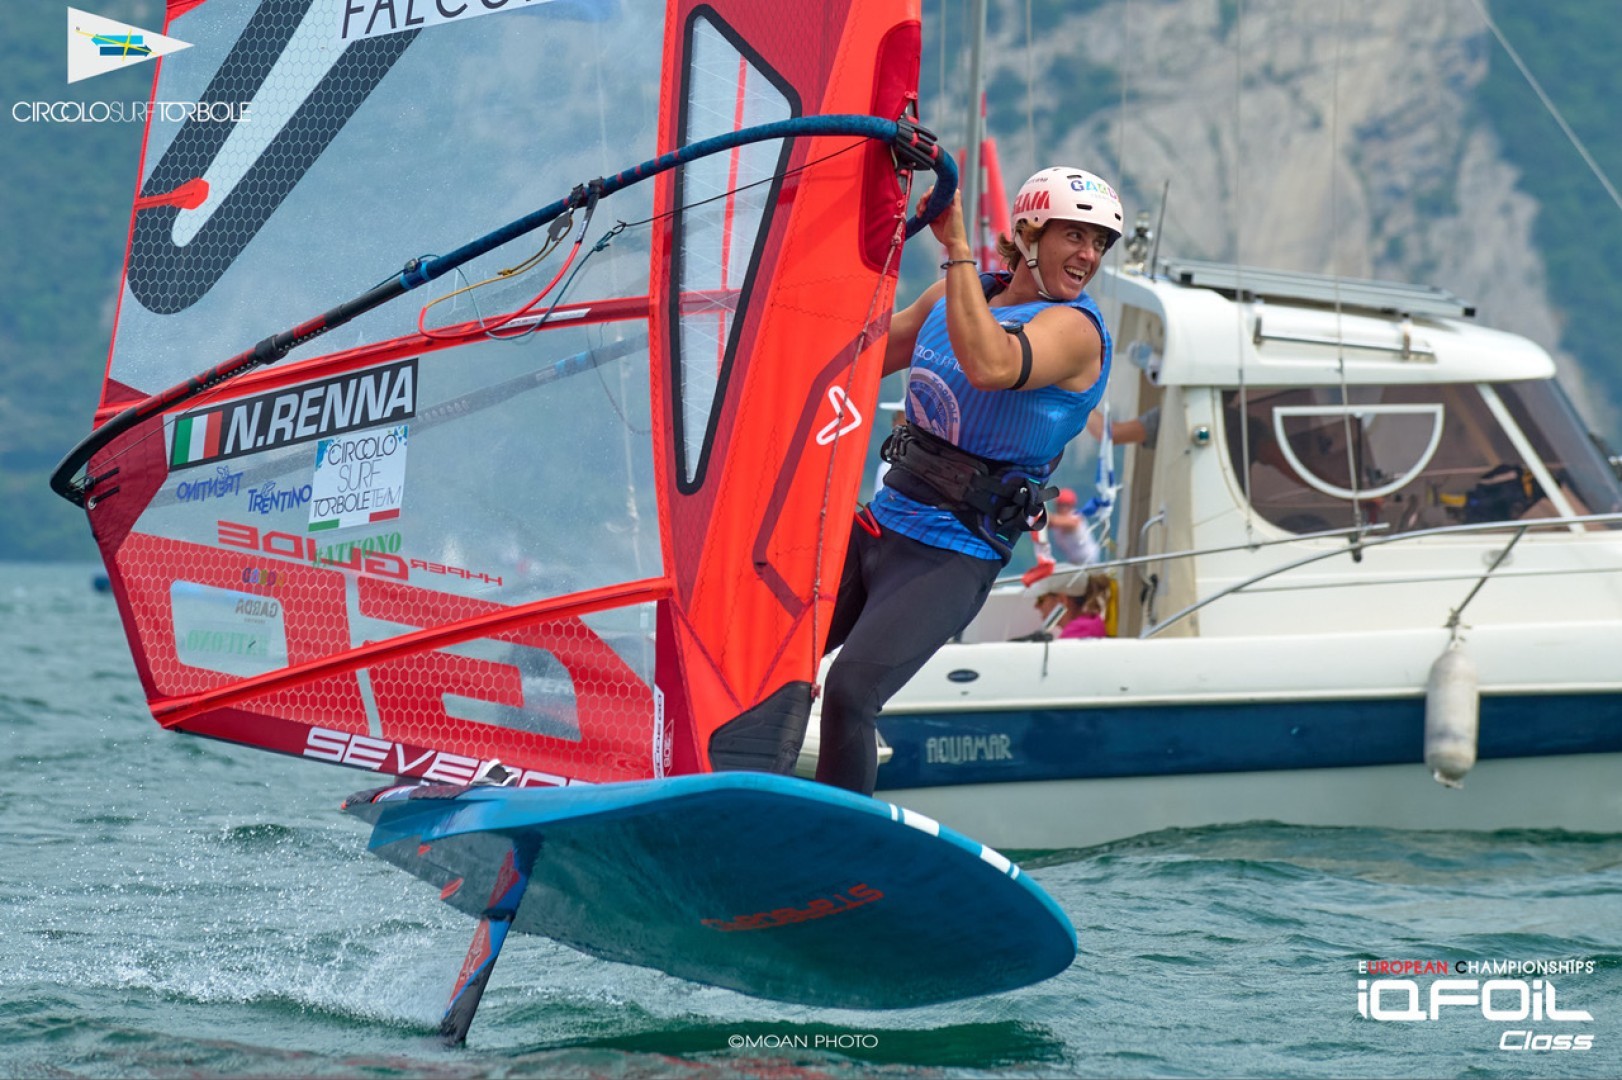 Windsurf olimpico: Argento Europeo per il trentino Nicolò Renna